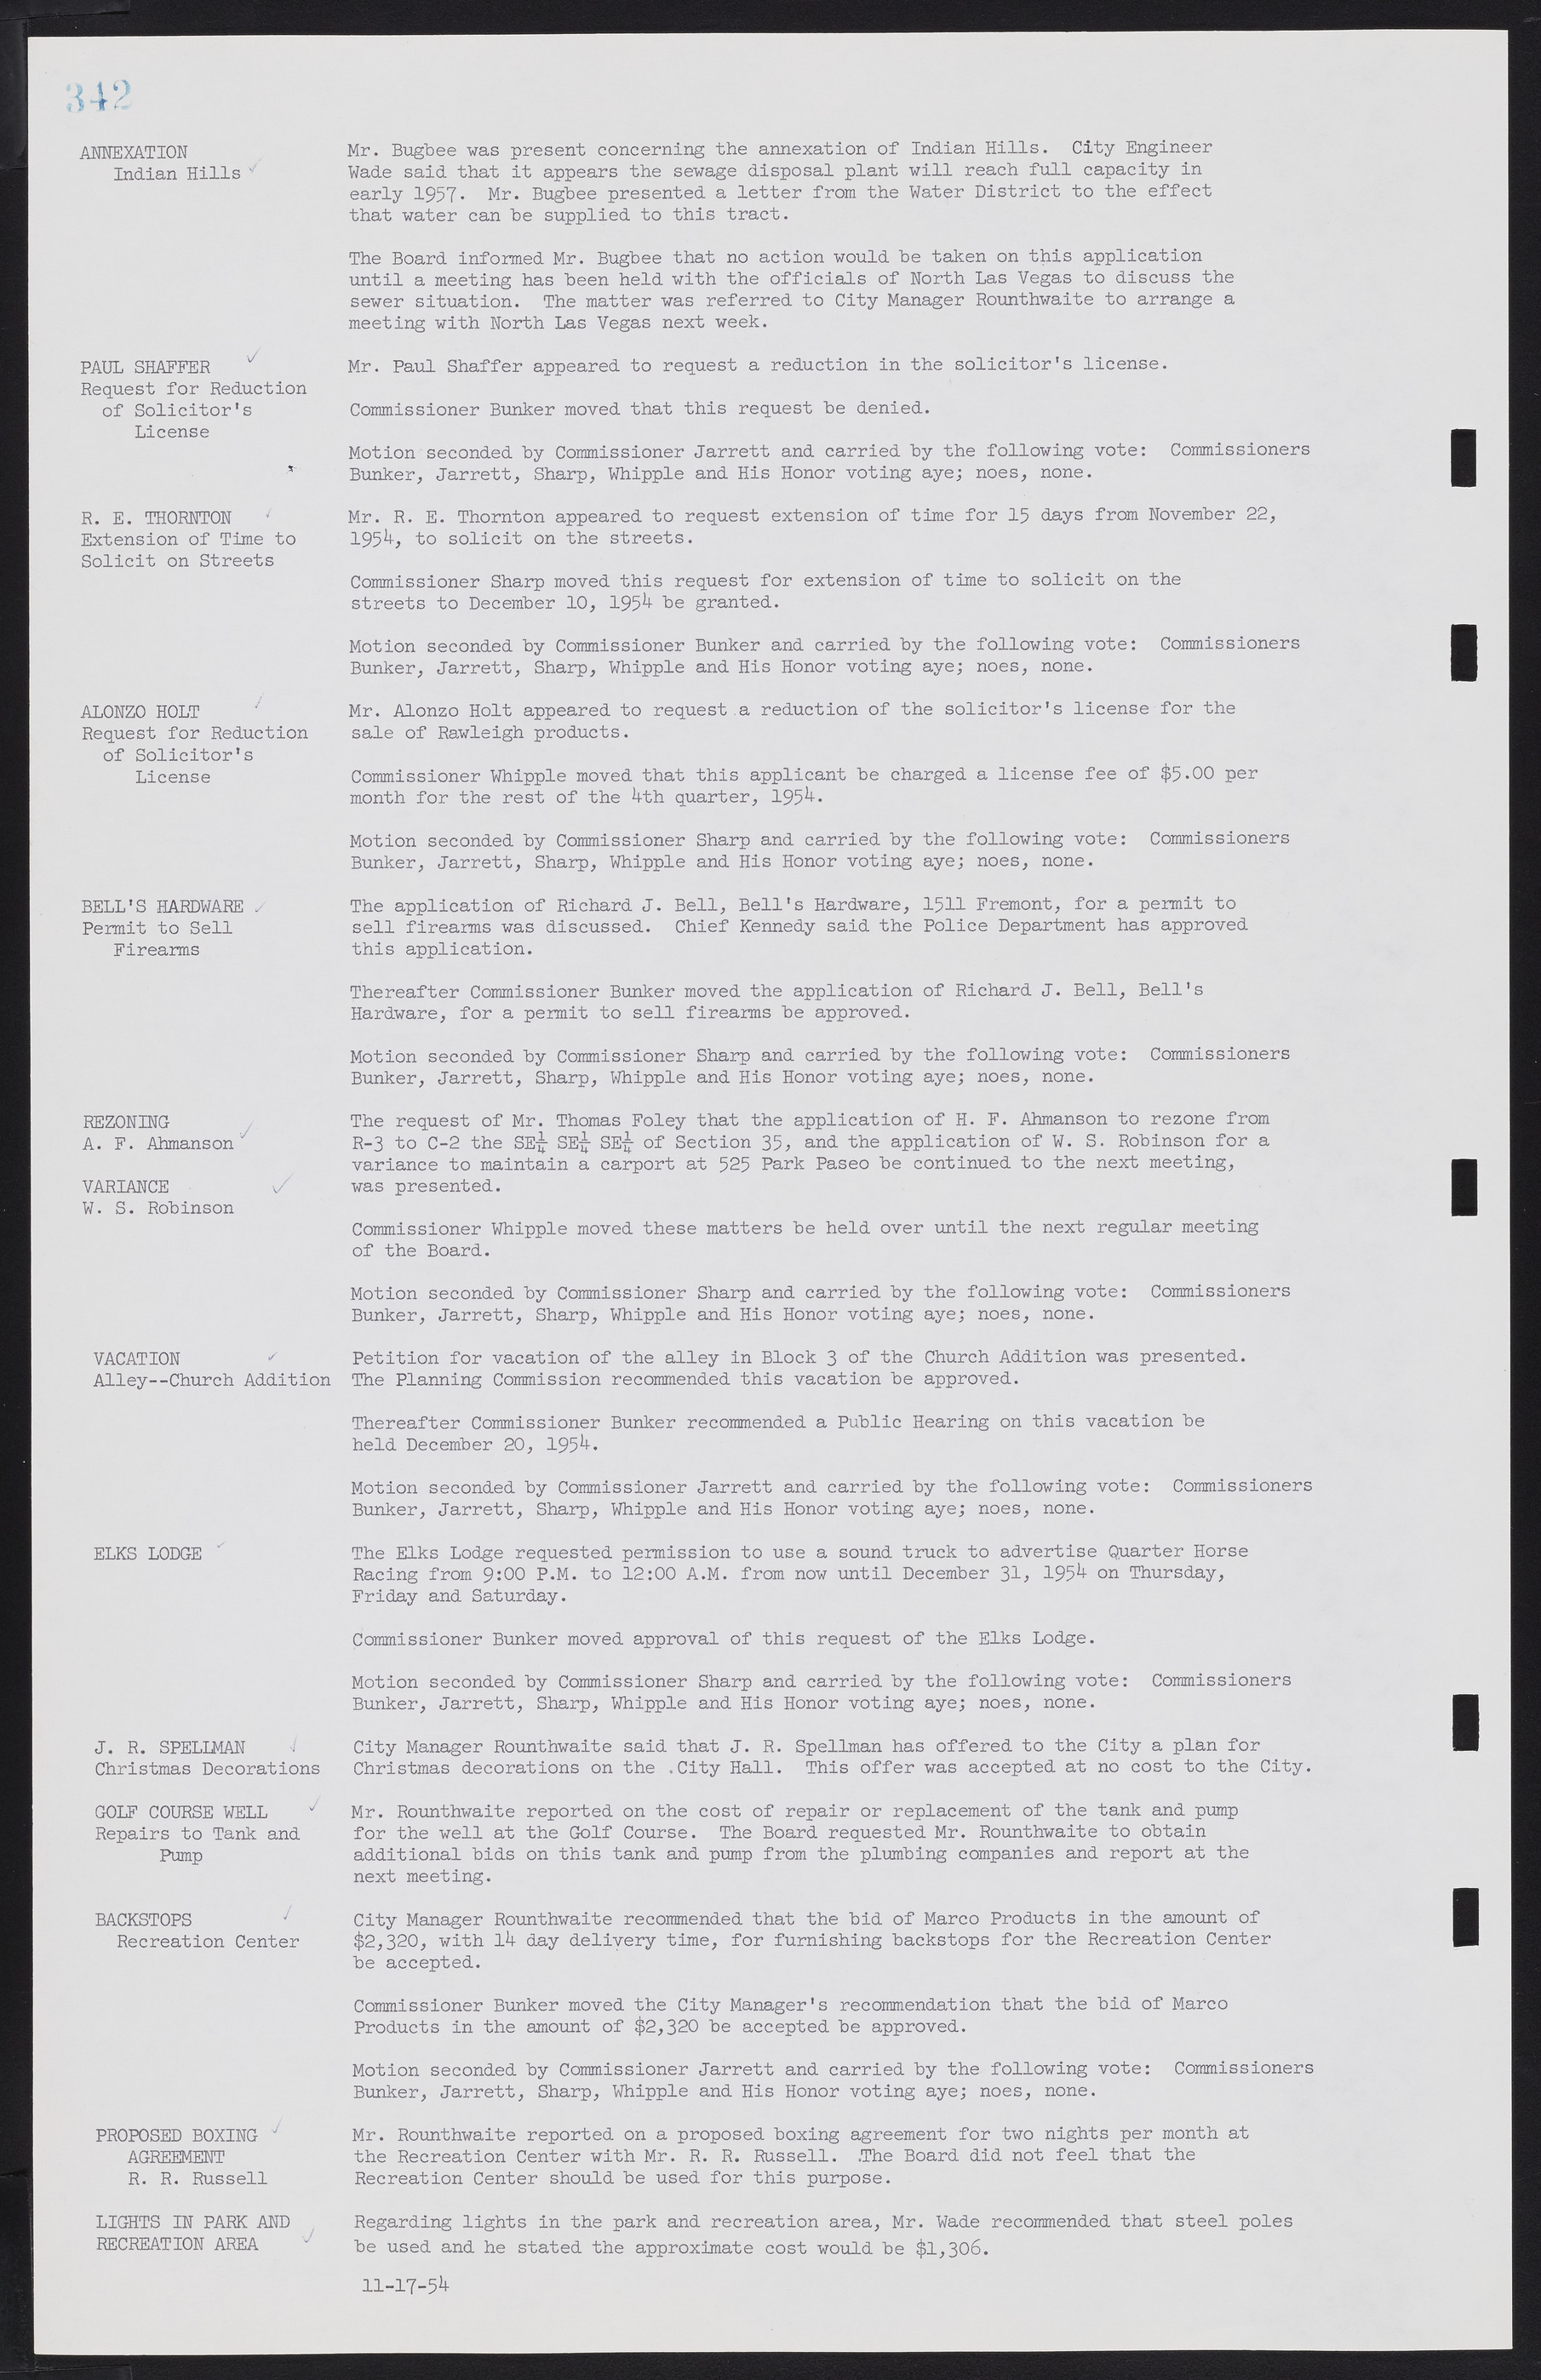 Las Vegas City Commission Minutes, February 17, 1954 to September 21, 1955, lvc000009-348